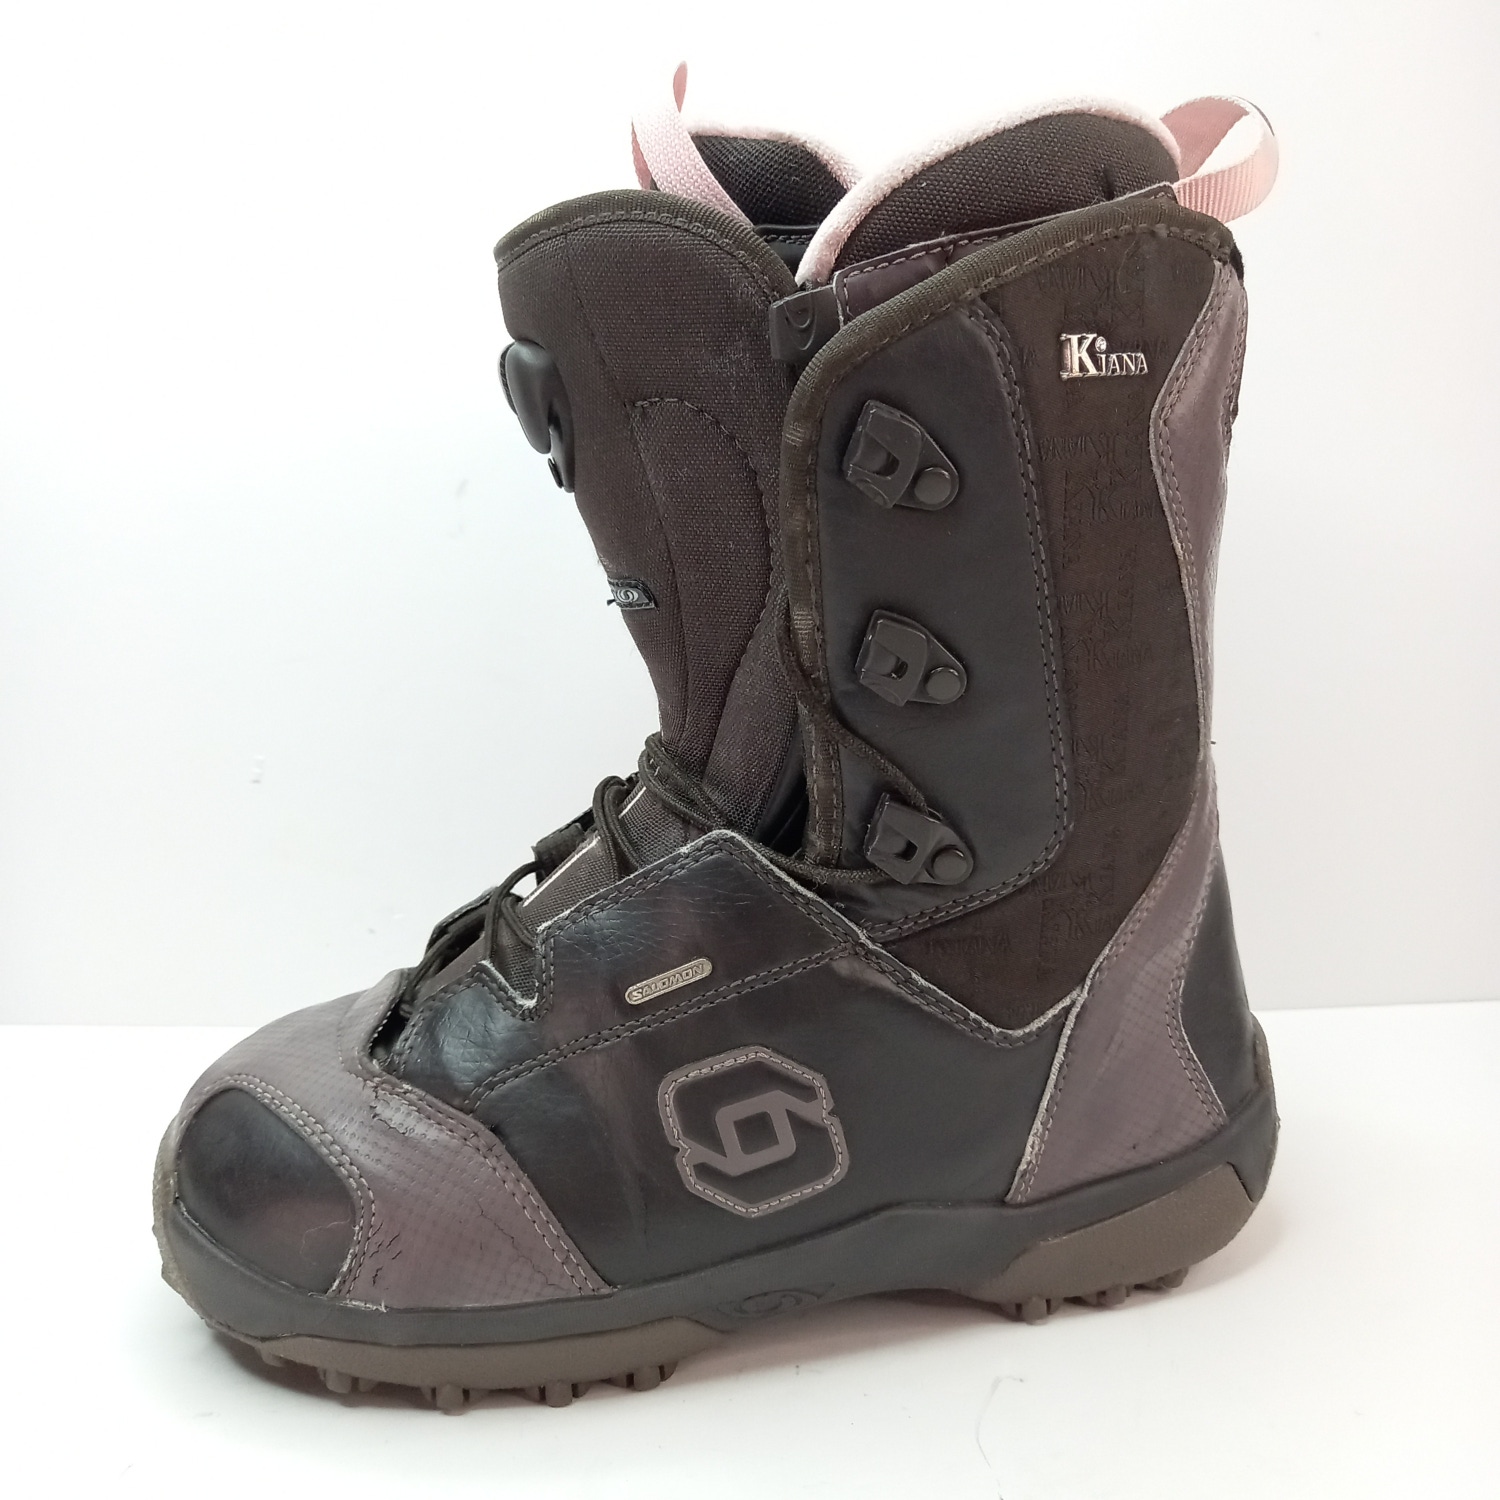 Women's Used Size 5.5 (Women's 6.5) Salomon Kiana Snowboard Boots